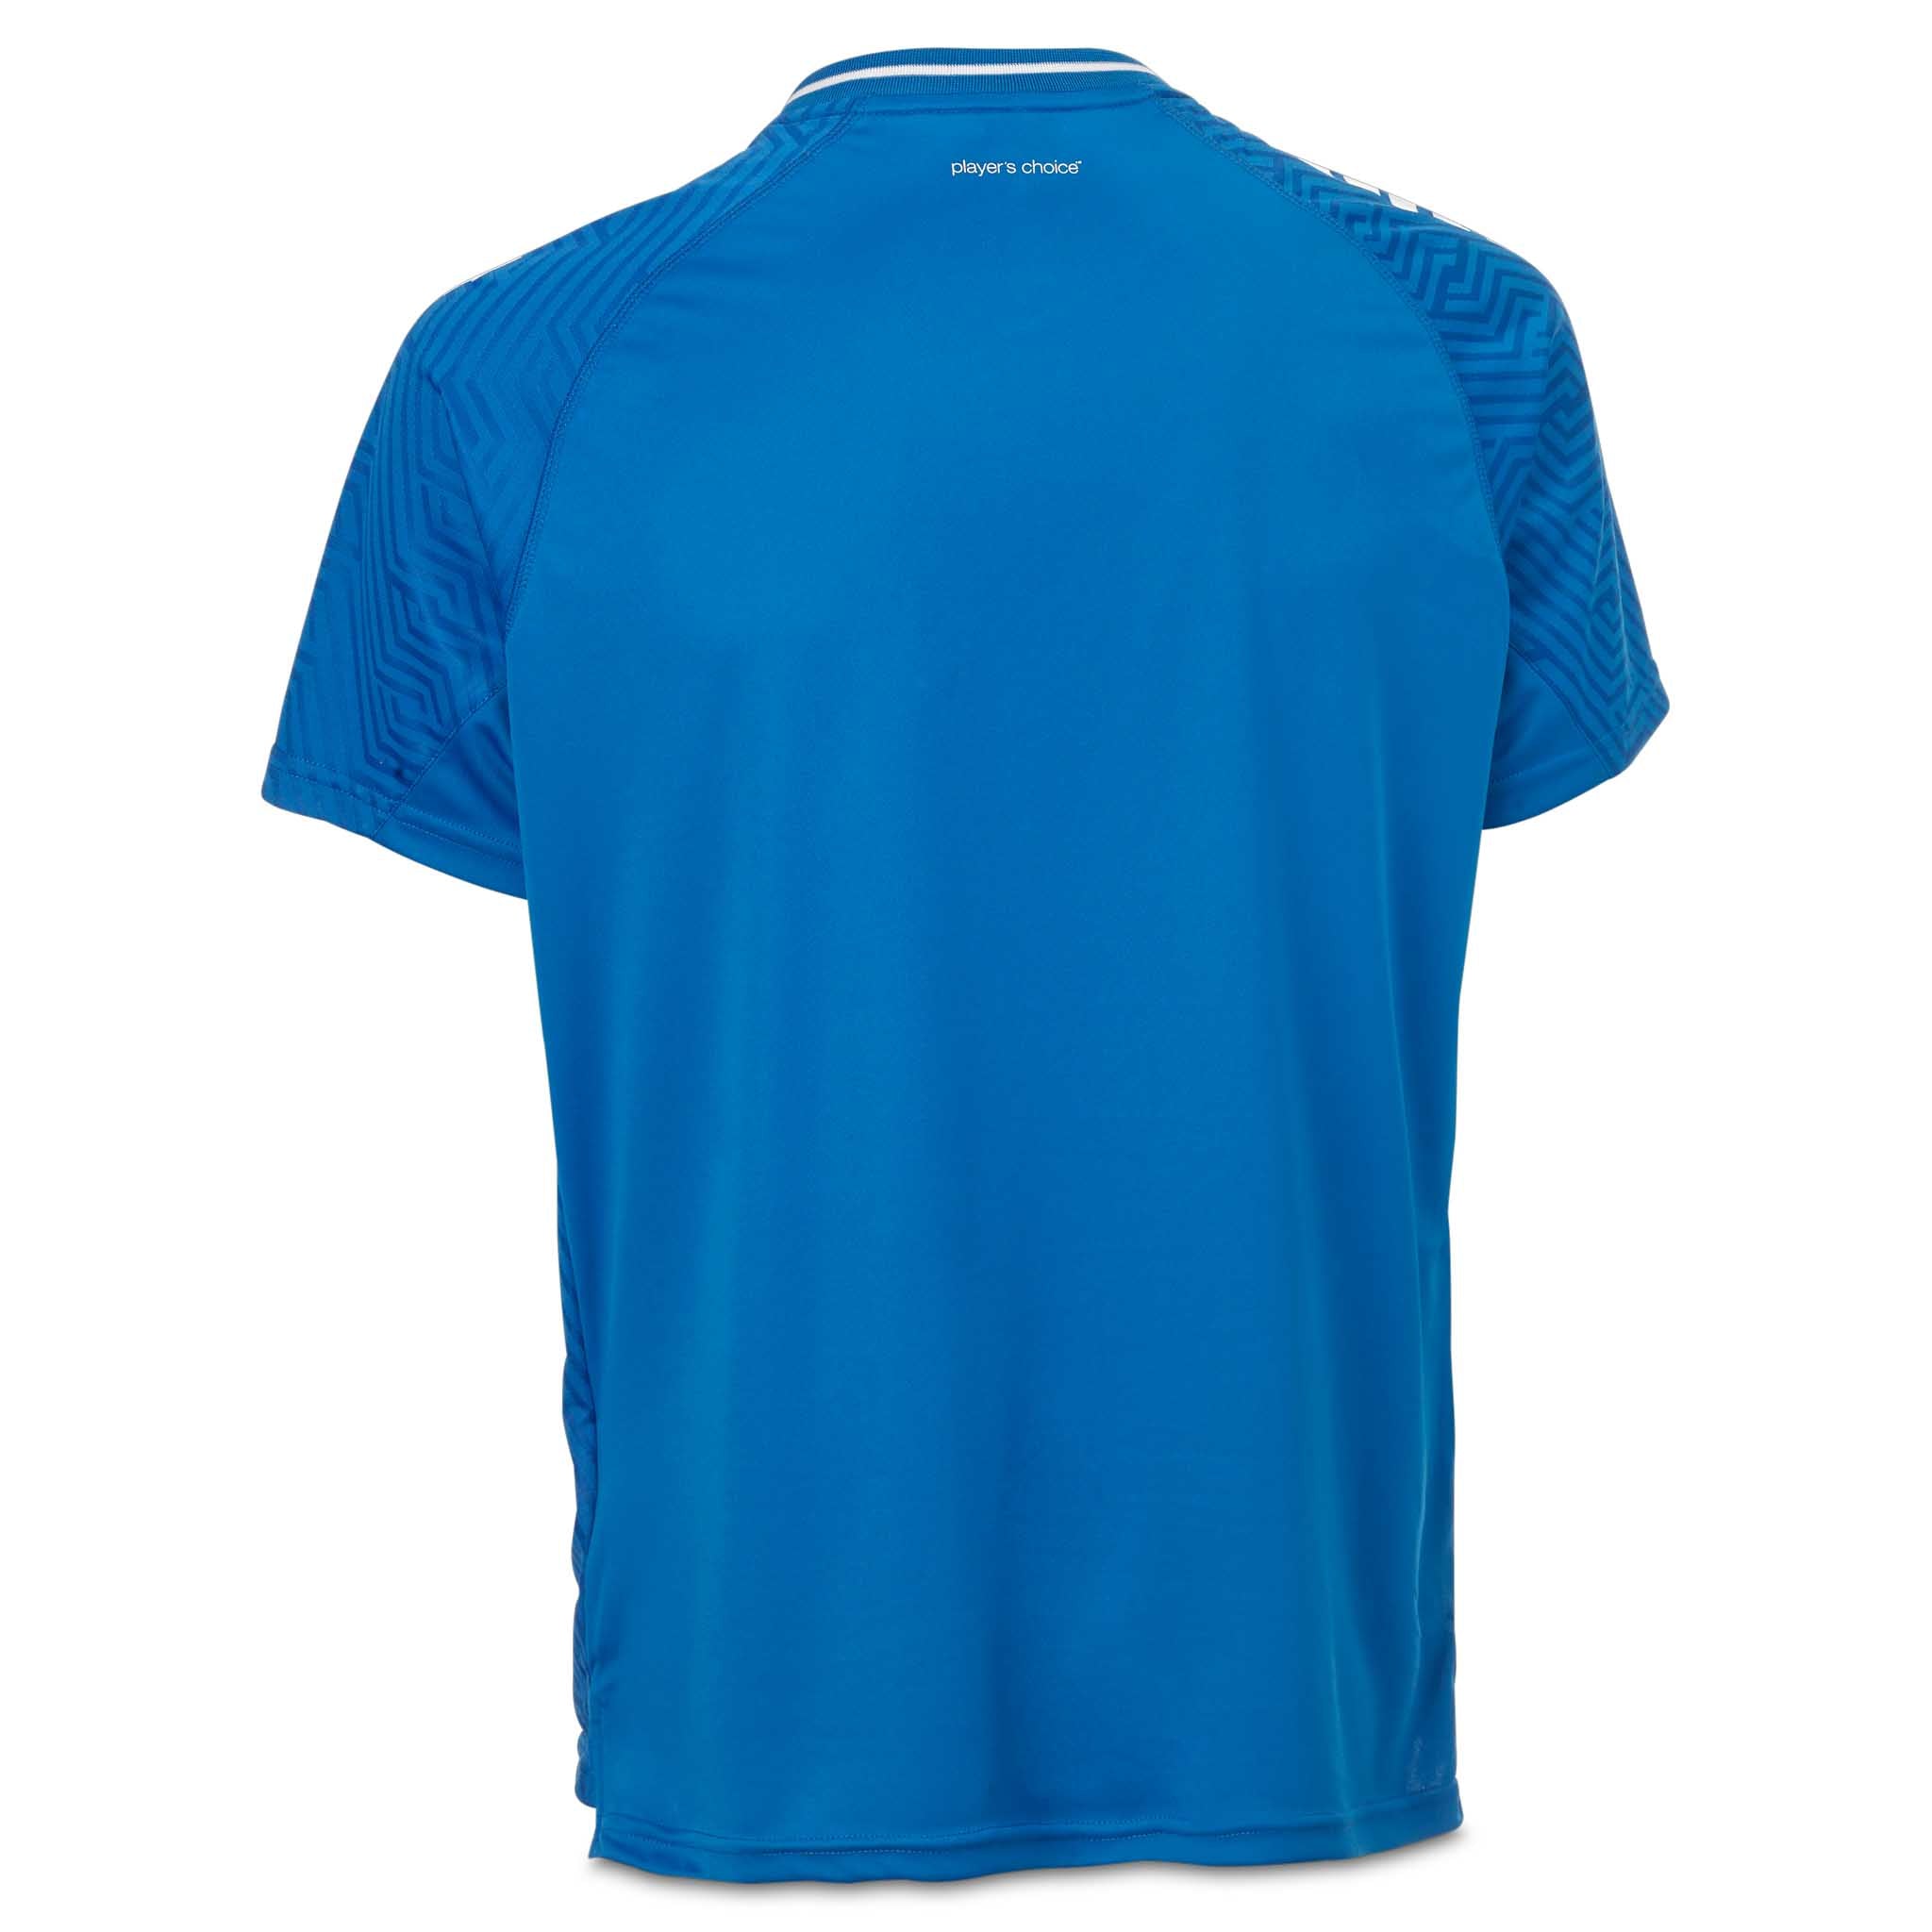 Monaco Player shirt S/S #colour_blue/white